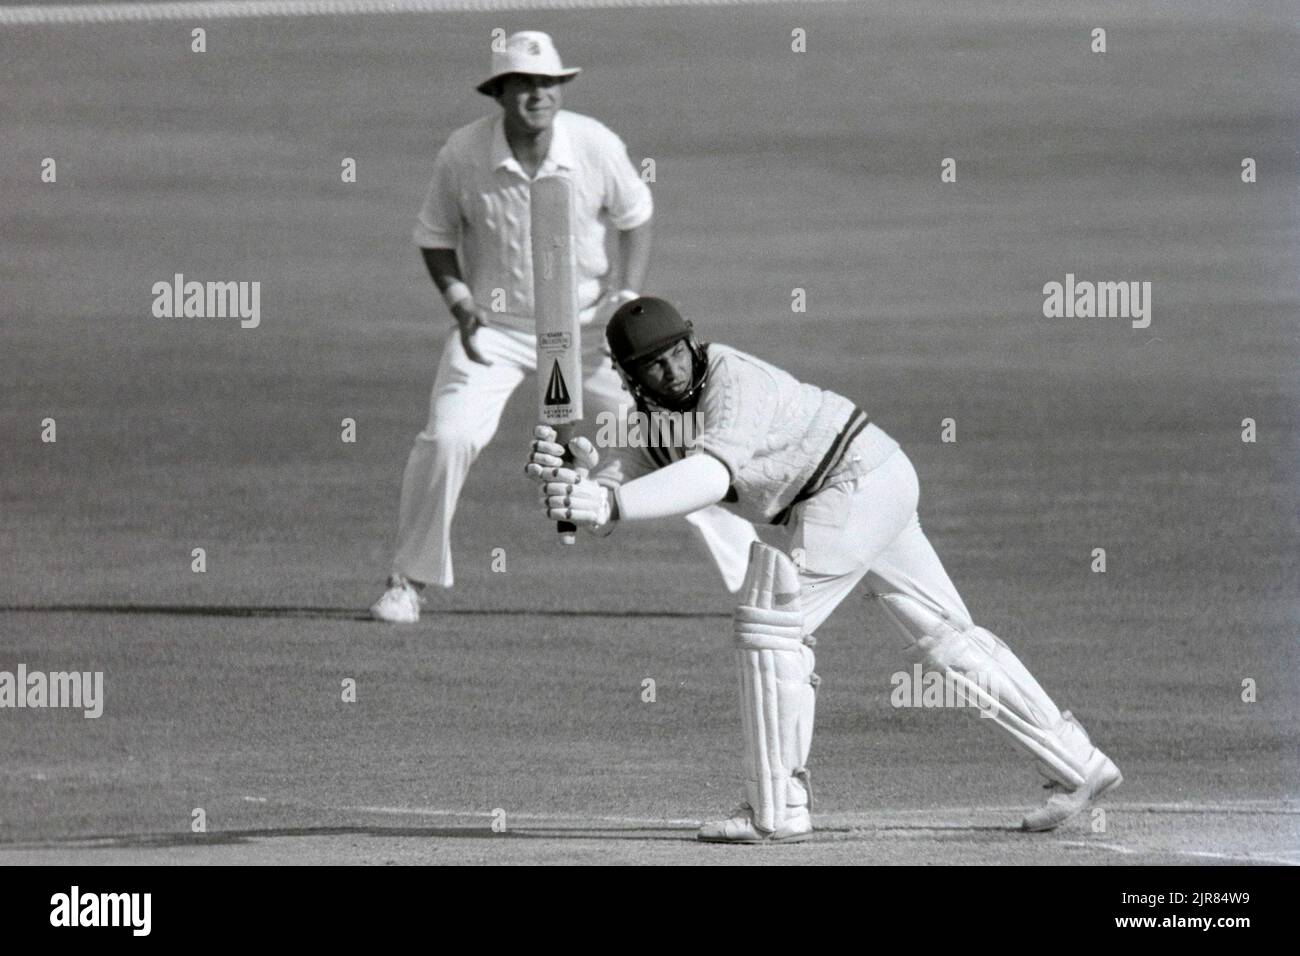 Shoaib Mohammad, batting for Pakistan against England, Fourth Test Match, England vs Pakistan, Edgbaston, Birmingham, England 23 - 28 July 1987 Stock Photo